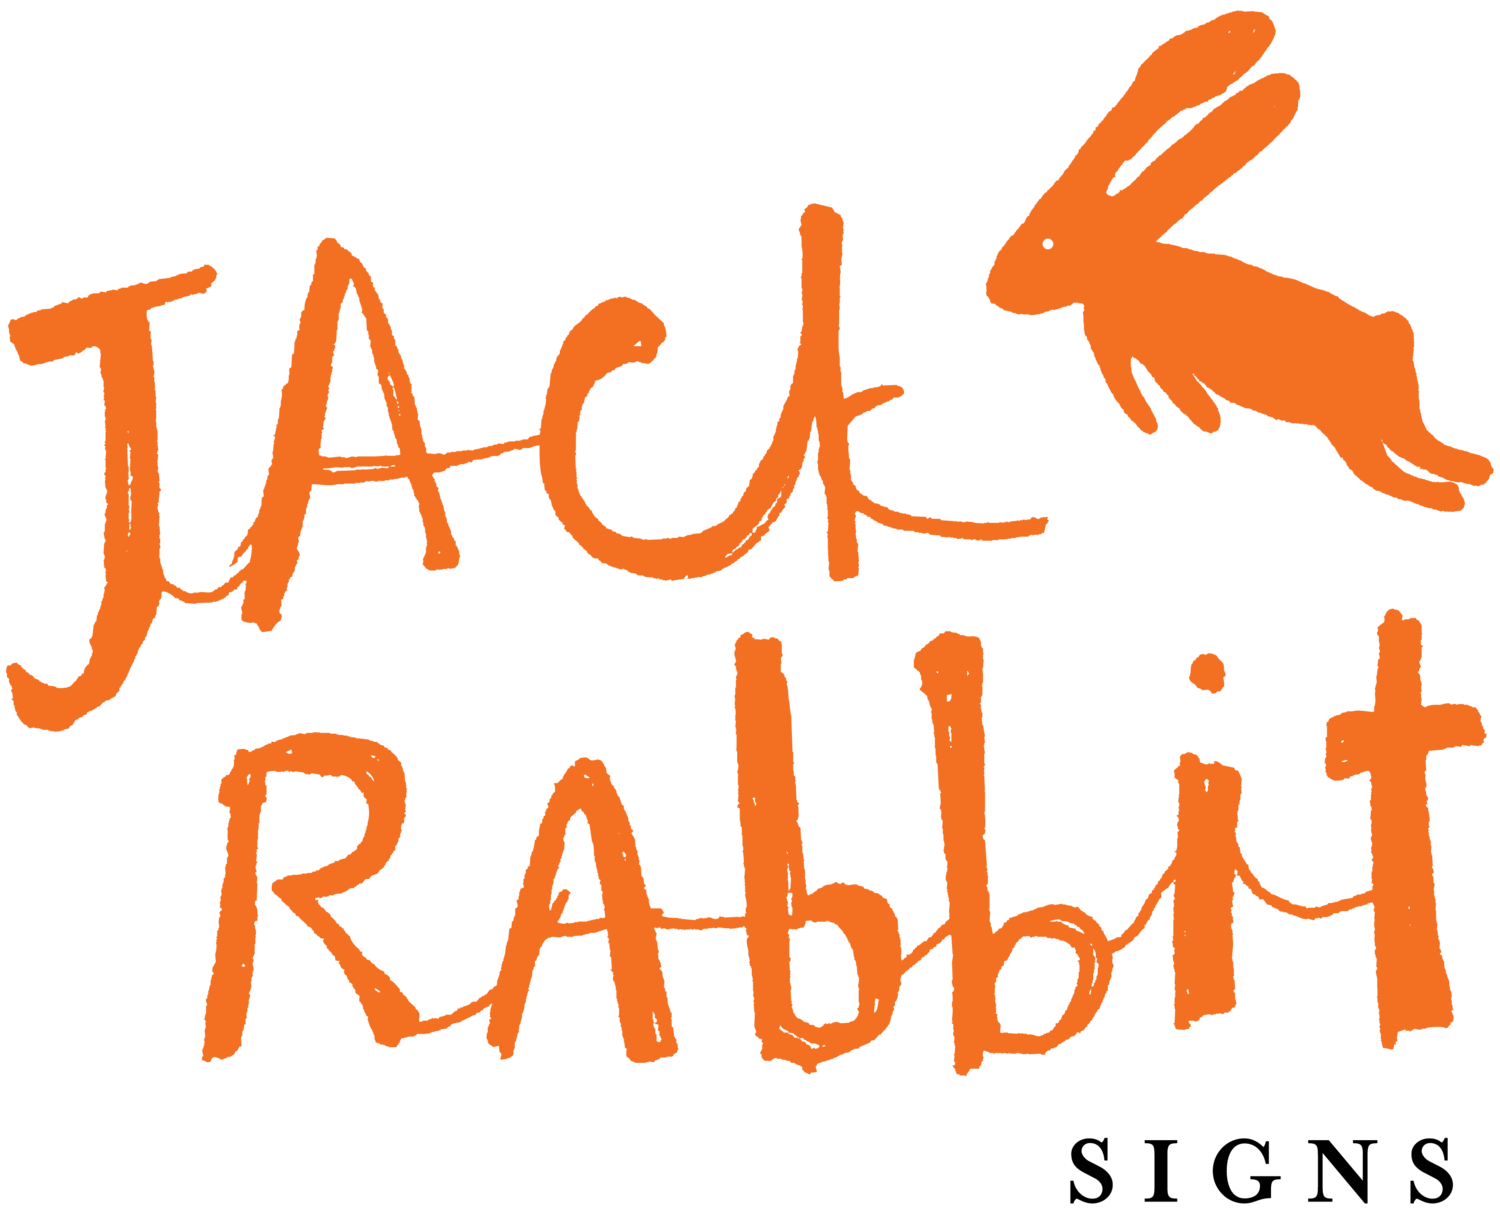 Jack Rabbit Signs